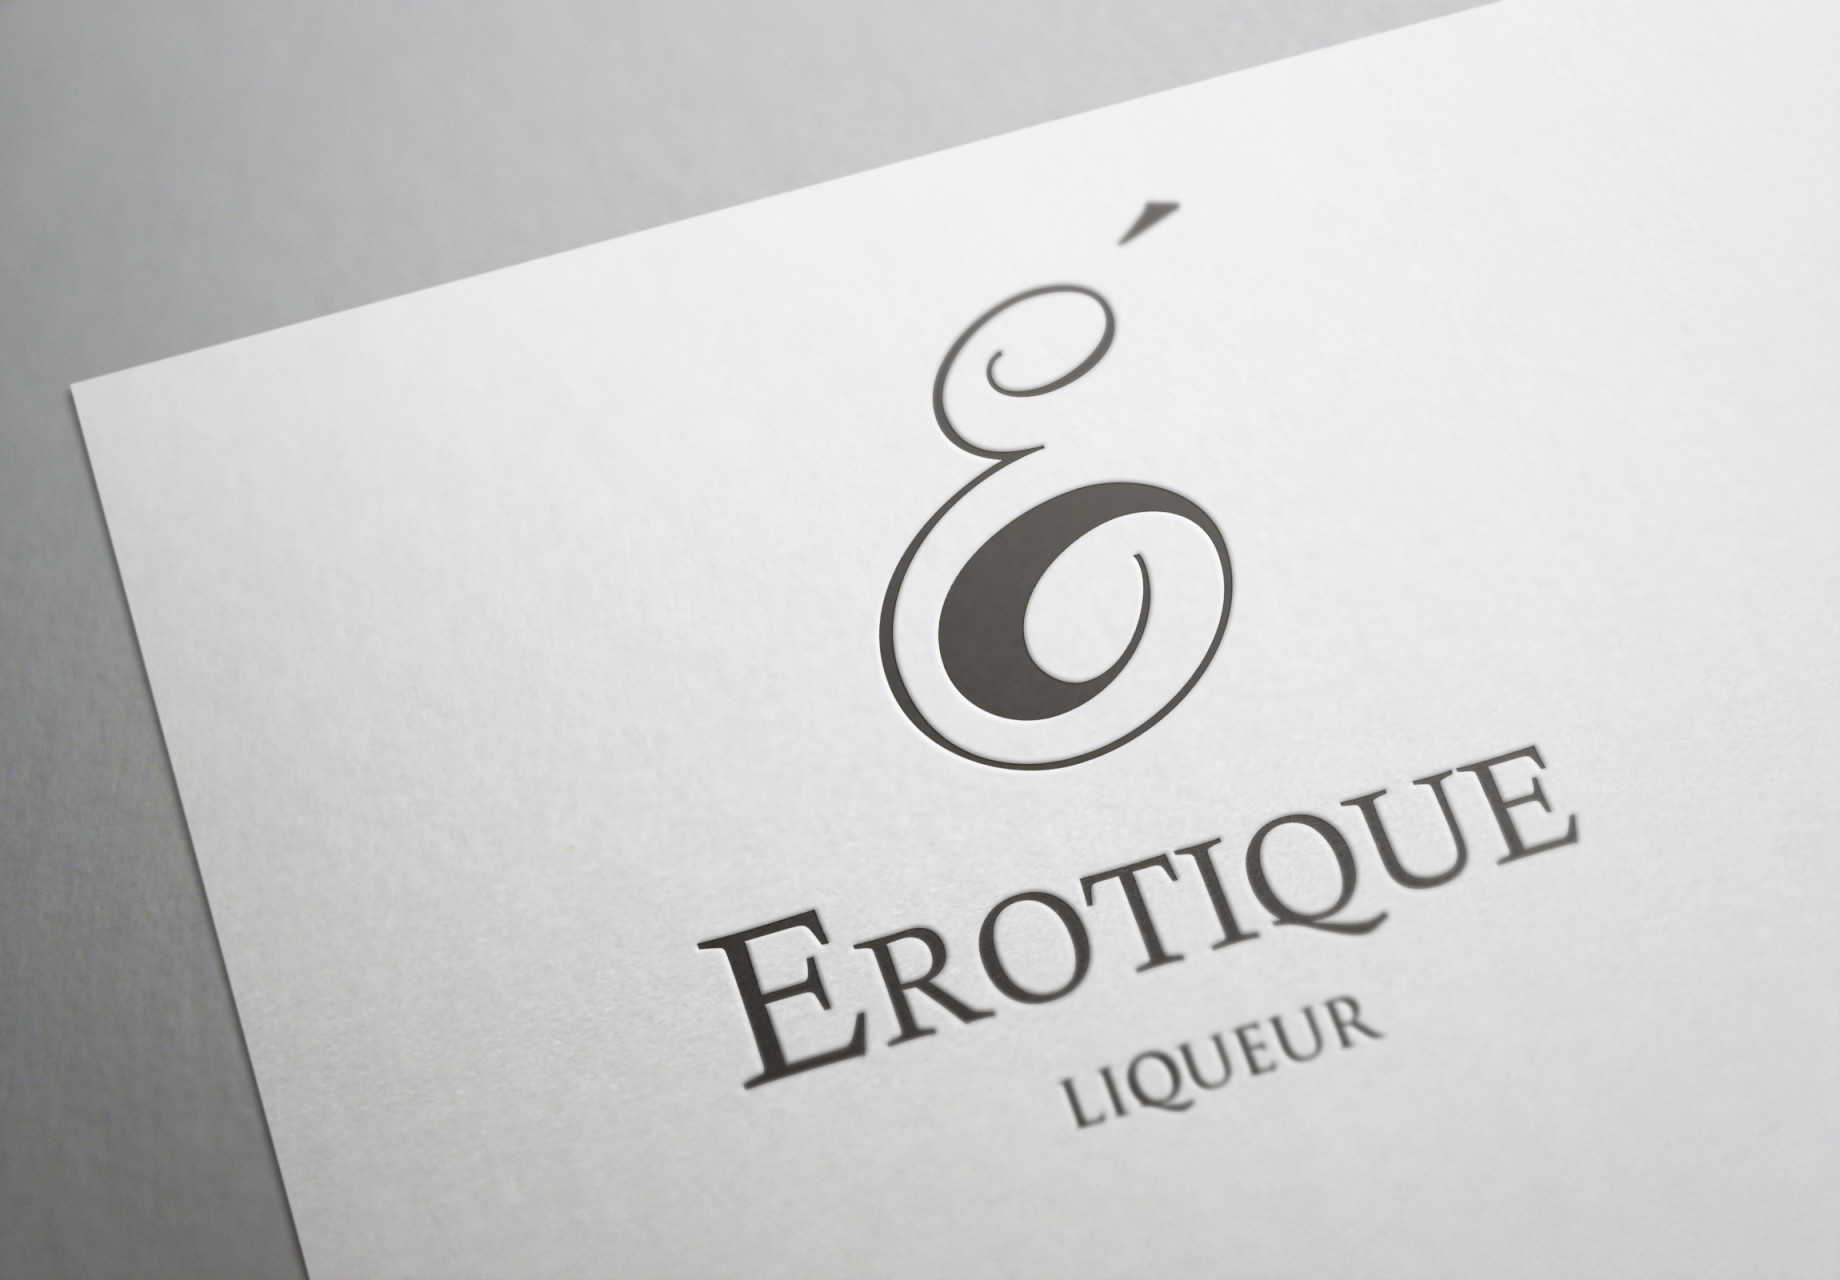 Local Native Introduces “Erotique” New Liquor